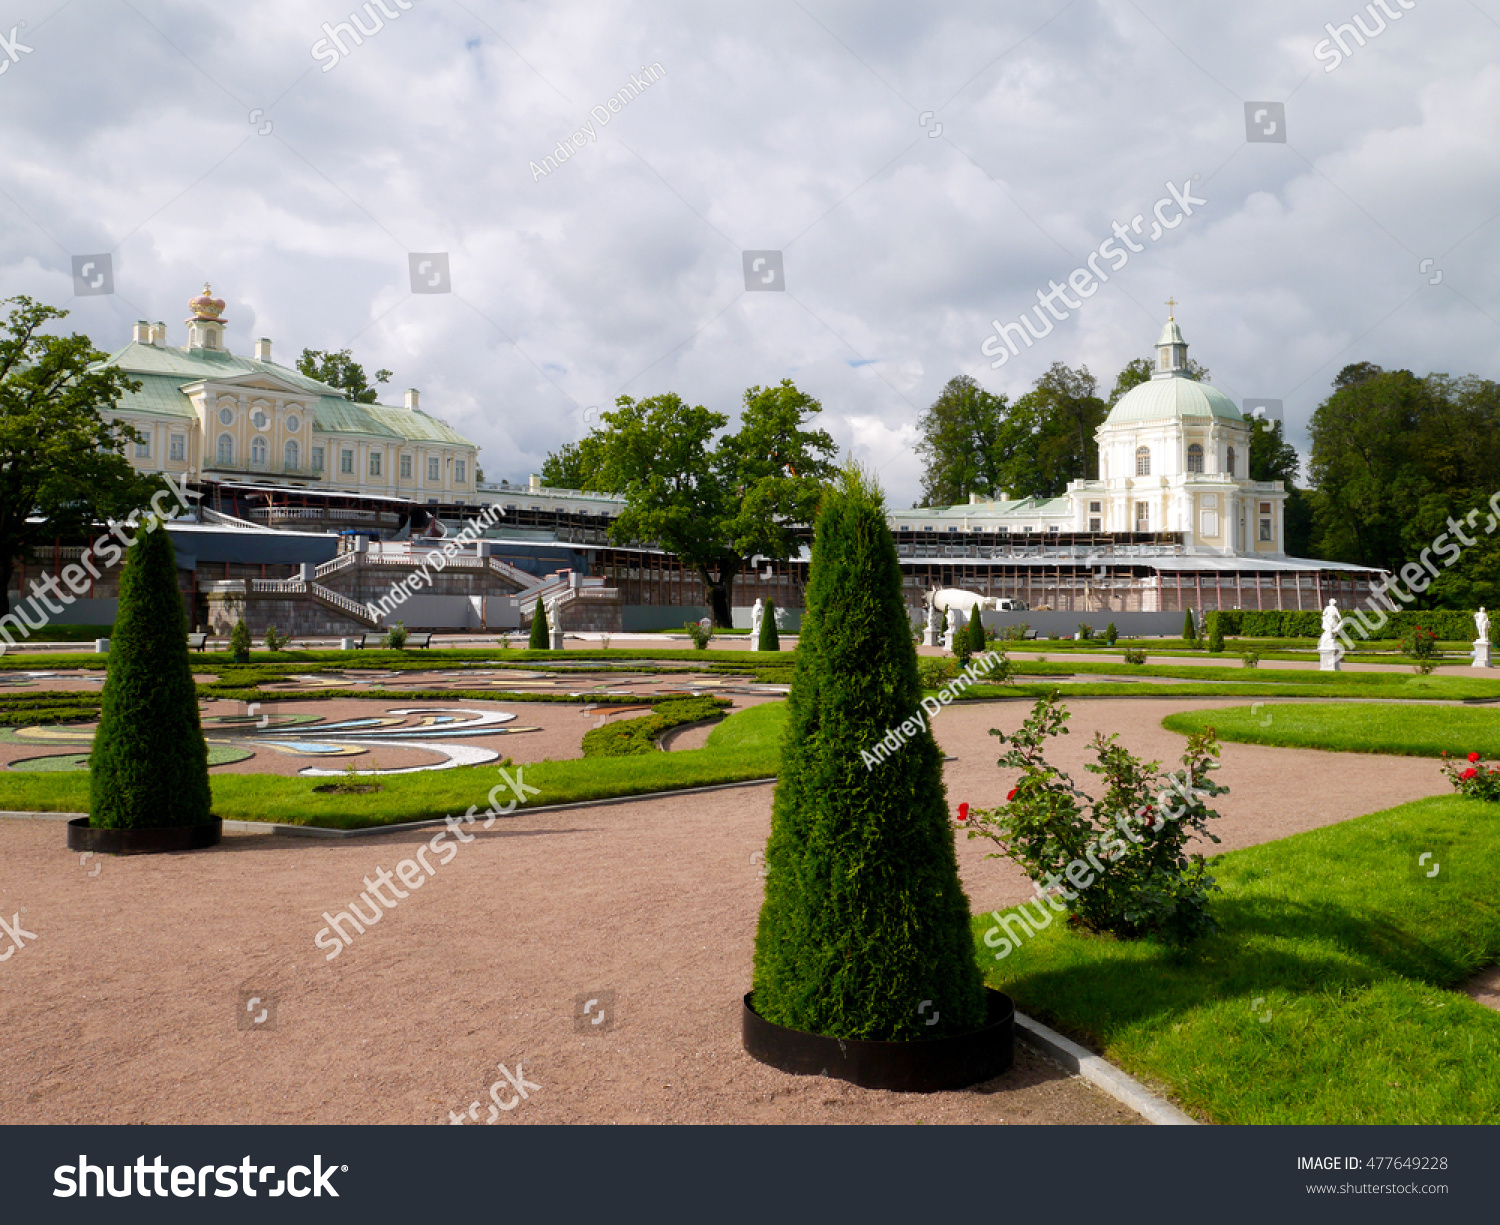 The Landcape park in Oranienbaum (Lomonosov), Russia #477649228